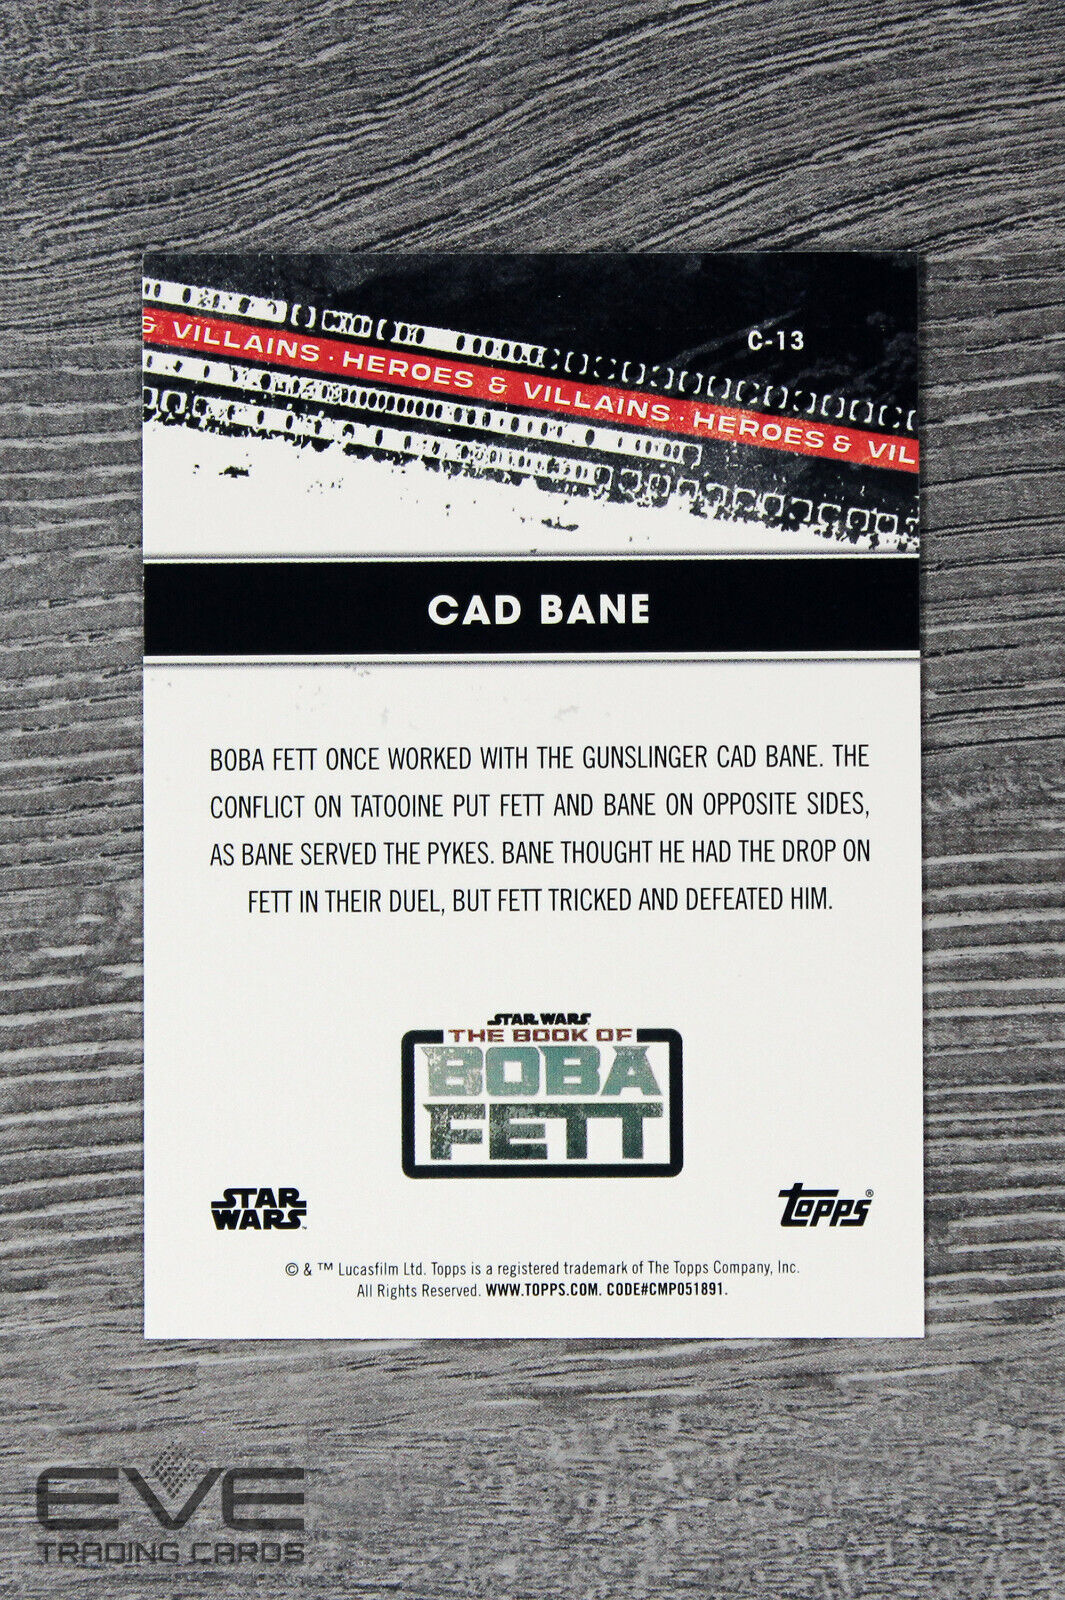 2022 Topps Star Wars Book Boba Fett Card #C-13 Cad Bane Heroes Villains NM/M